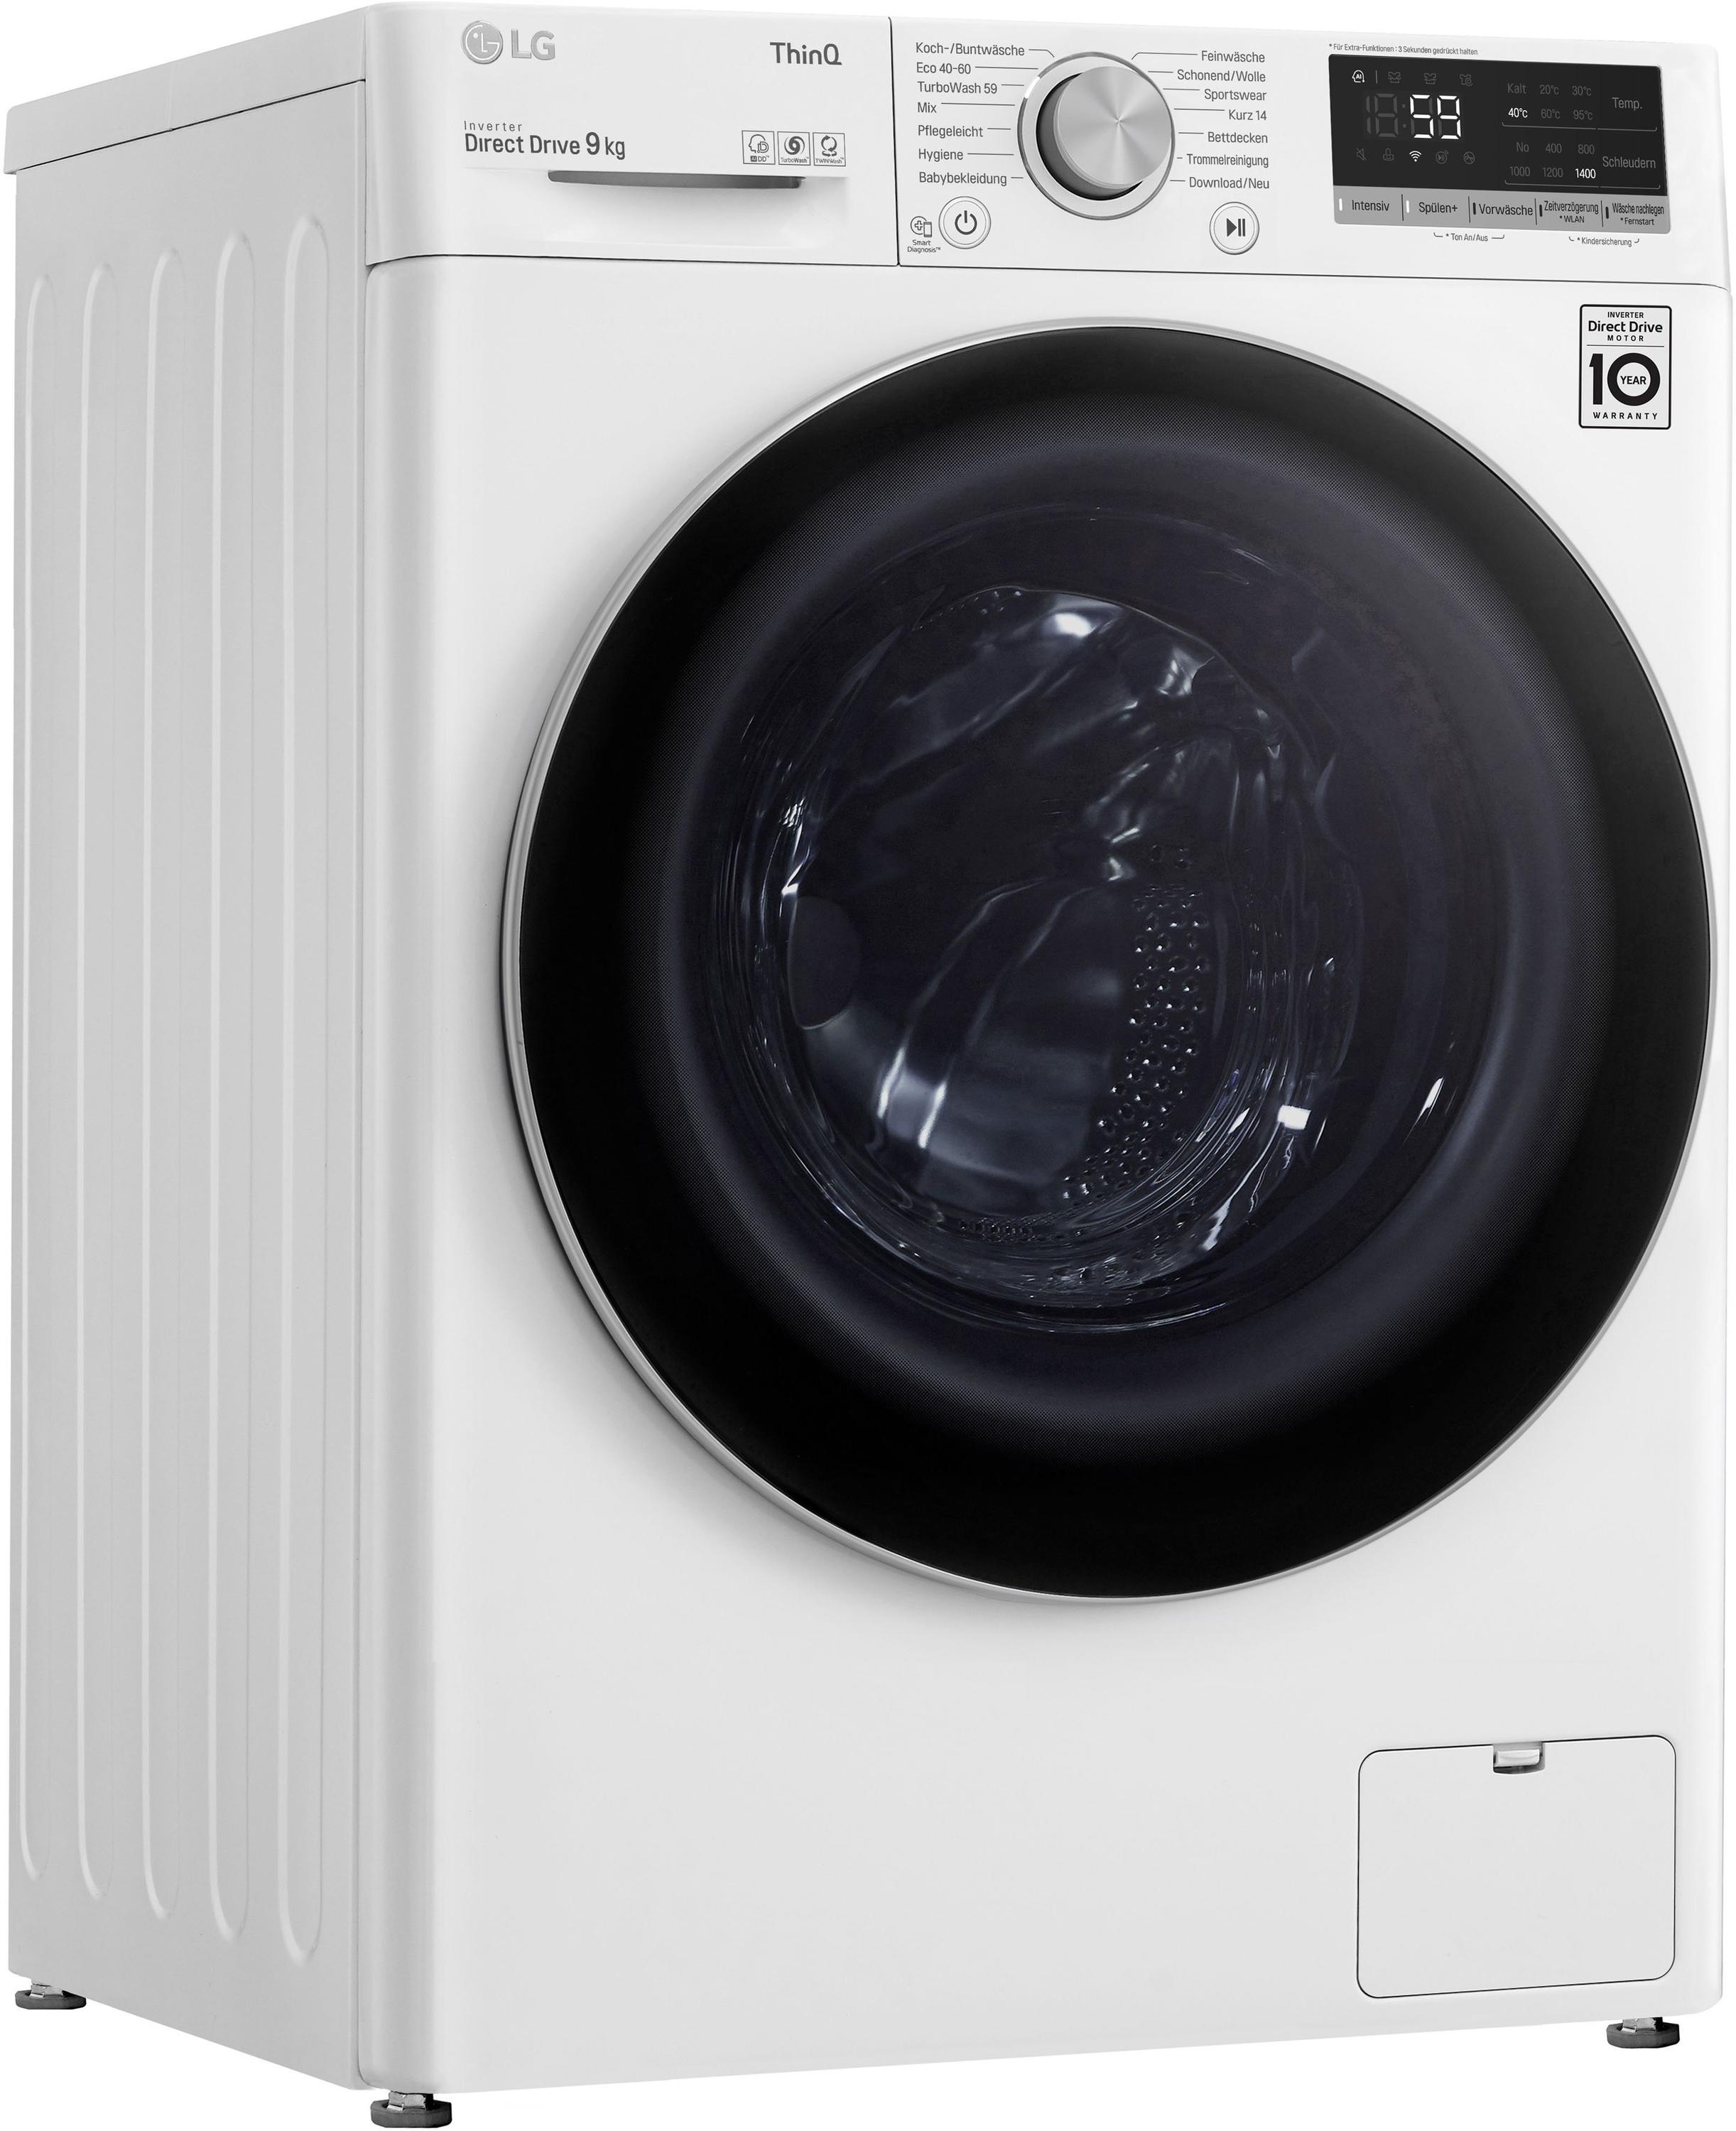 LG Waschmaschine Test ❤️ Testbericht.de Februar 2022